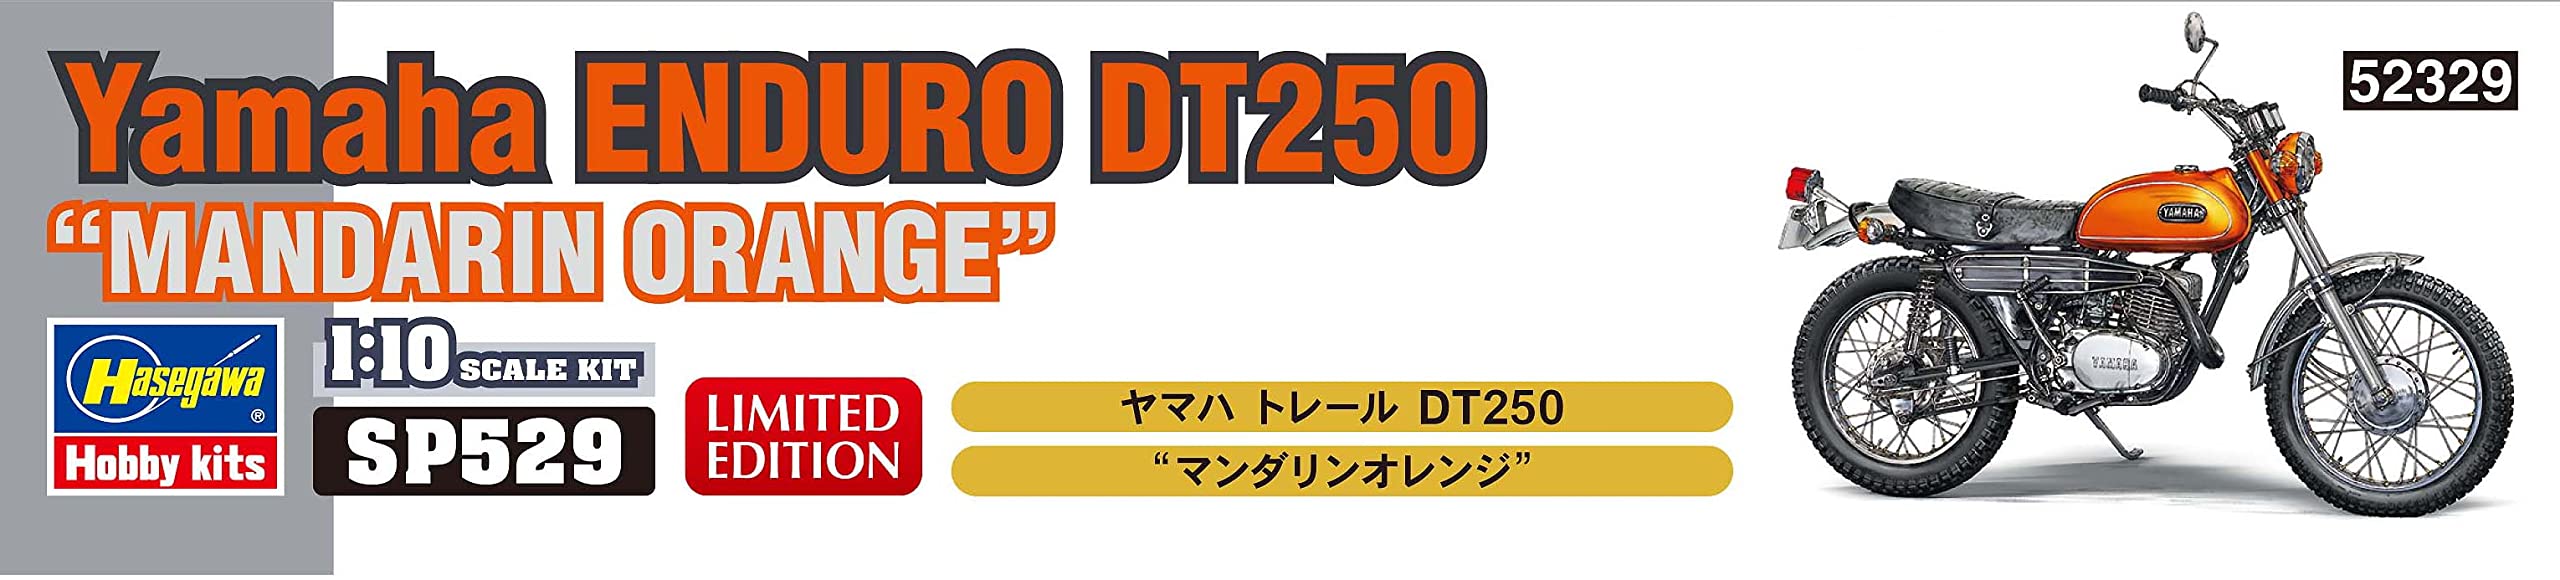 Hasegawa 1/10 YAMAHA ENDURO DT250 MANDARIN ORANGE Model kit SP529 NEW from Japan_5